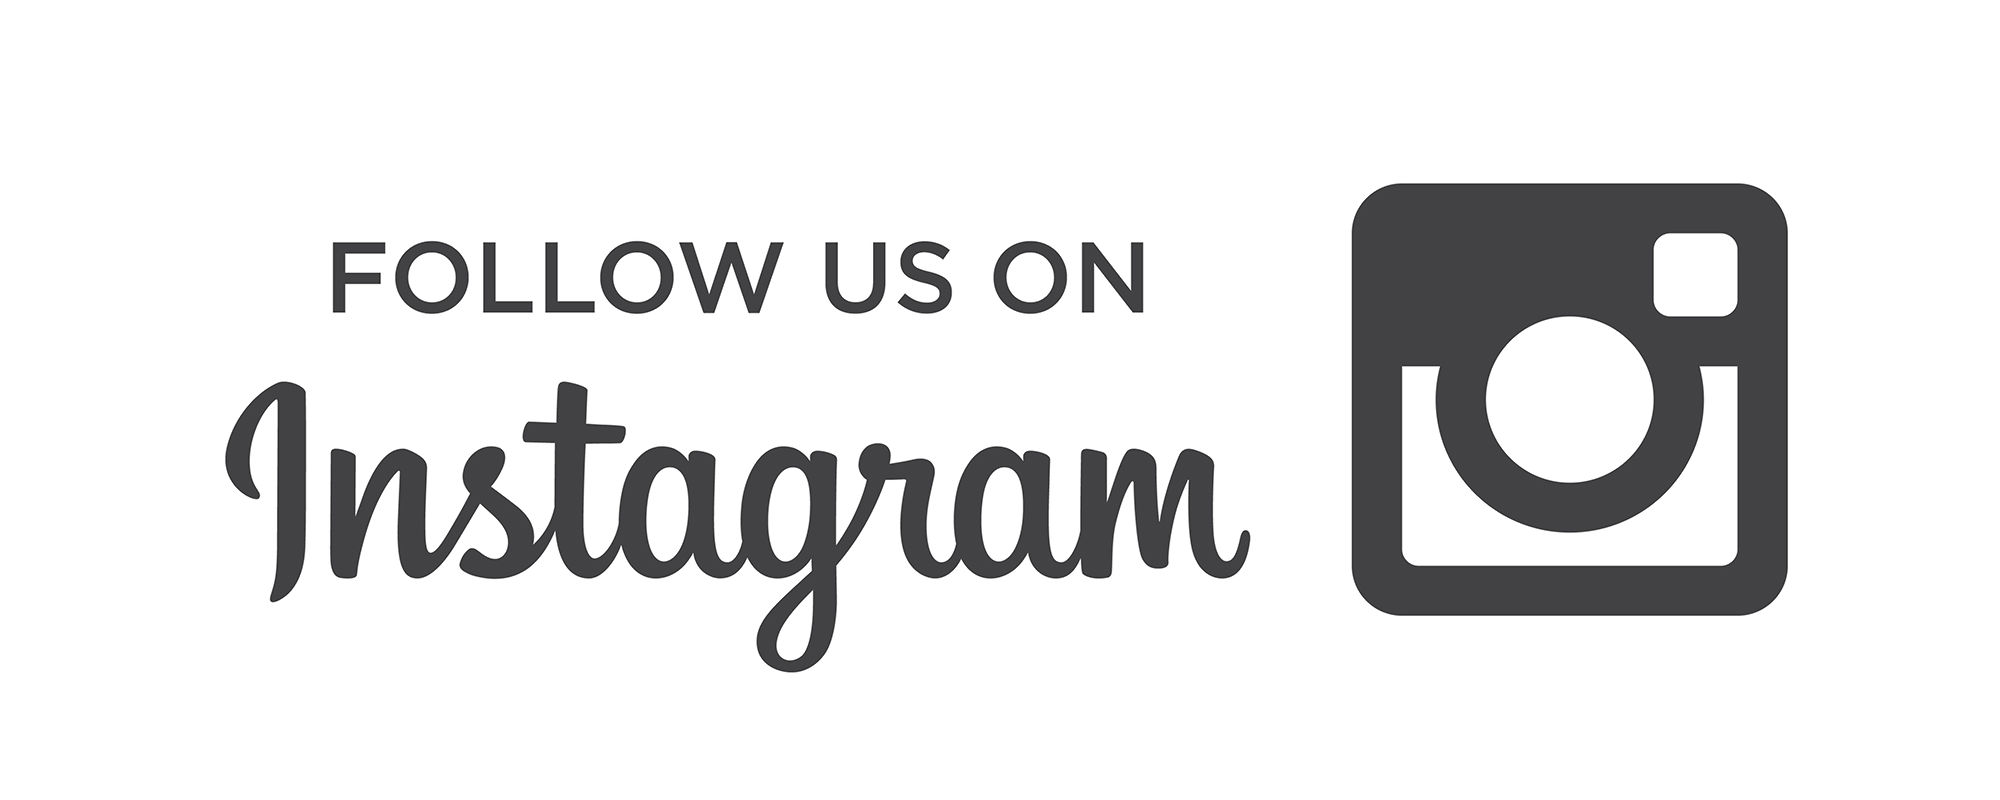 Follow Us On Instagram New Logo - Follow On Instagram Icon Wwwpixsharkcom Images Logo Image - Free ...